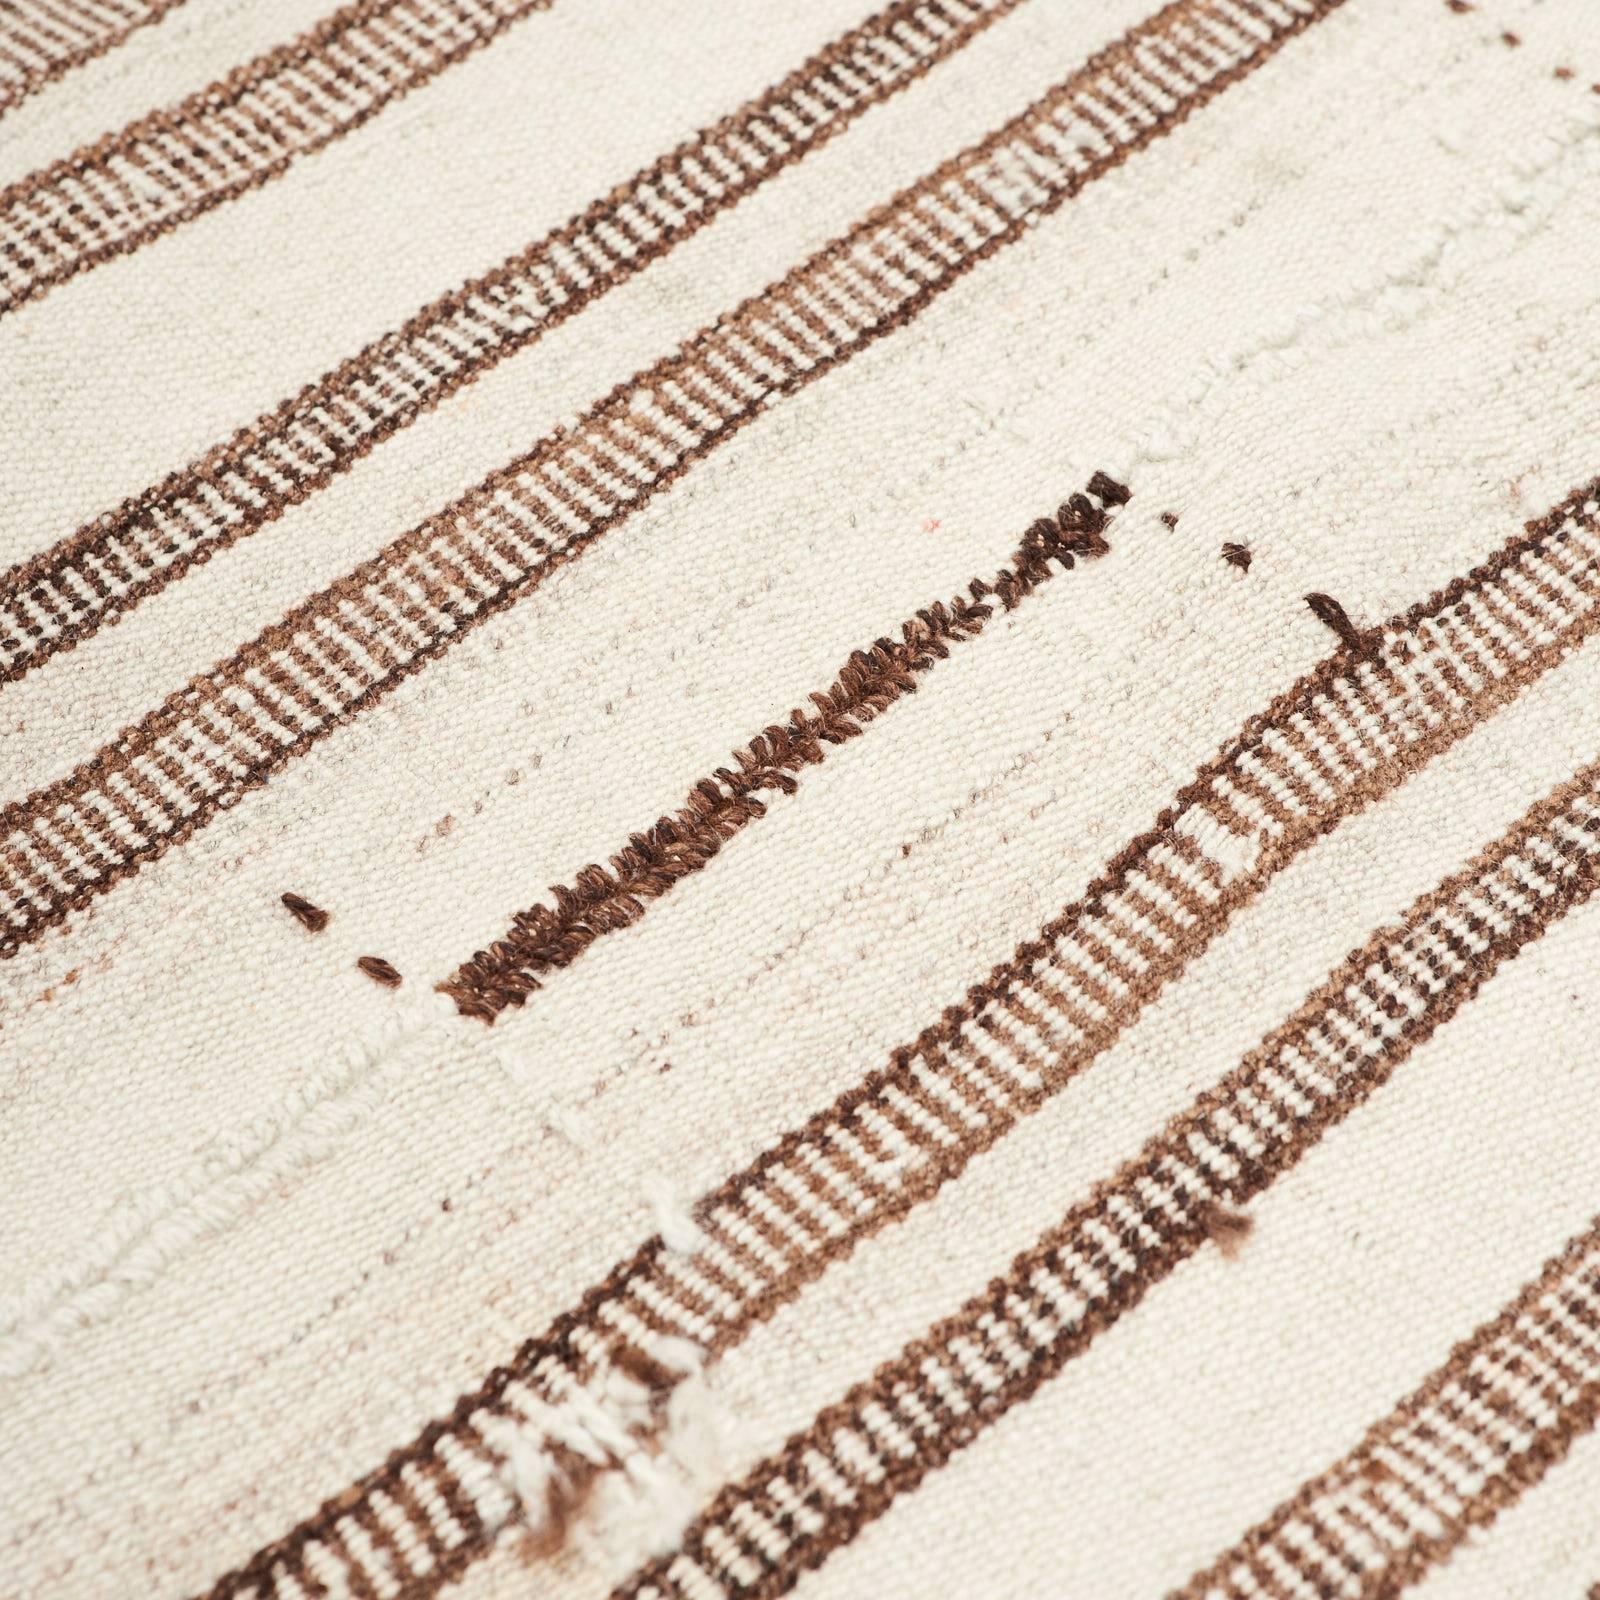 20th Century Turkish Striped Plain Weave Blanket